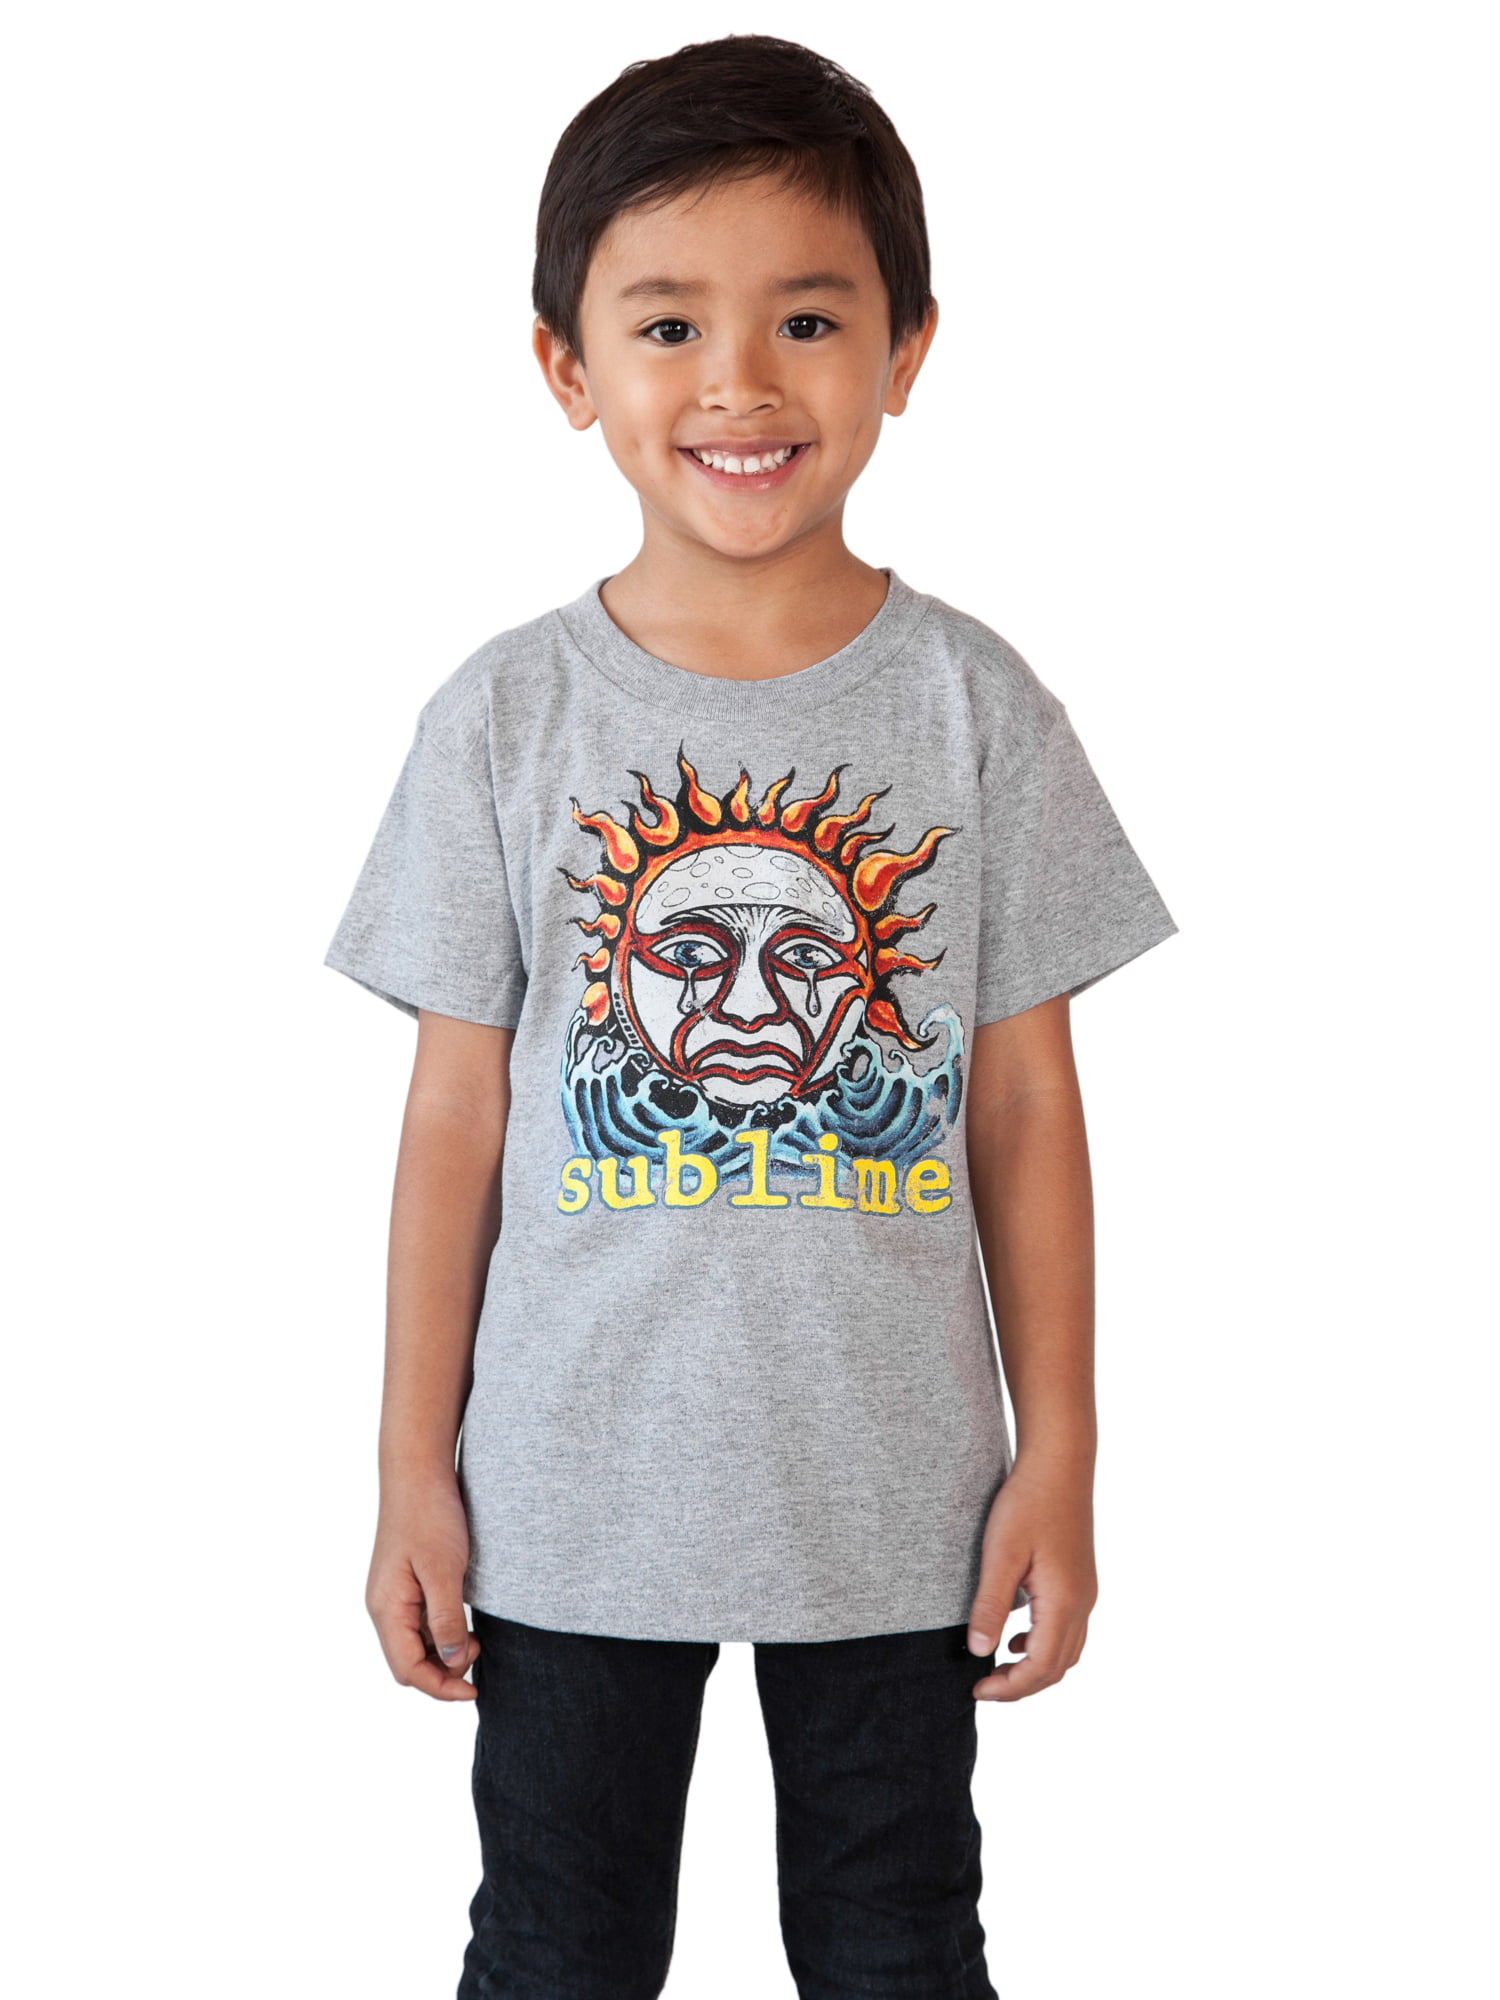 Shirt Sublime L.B.C Graphic Shirt Black Children Boy Kids T 